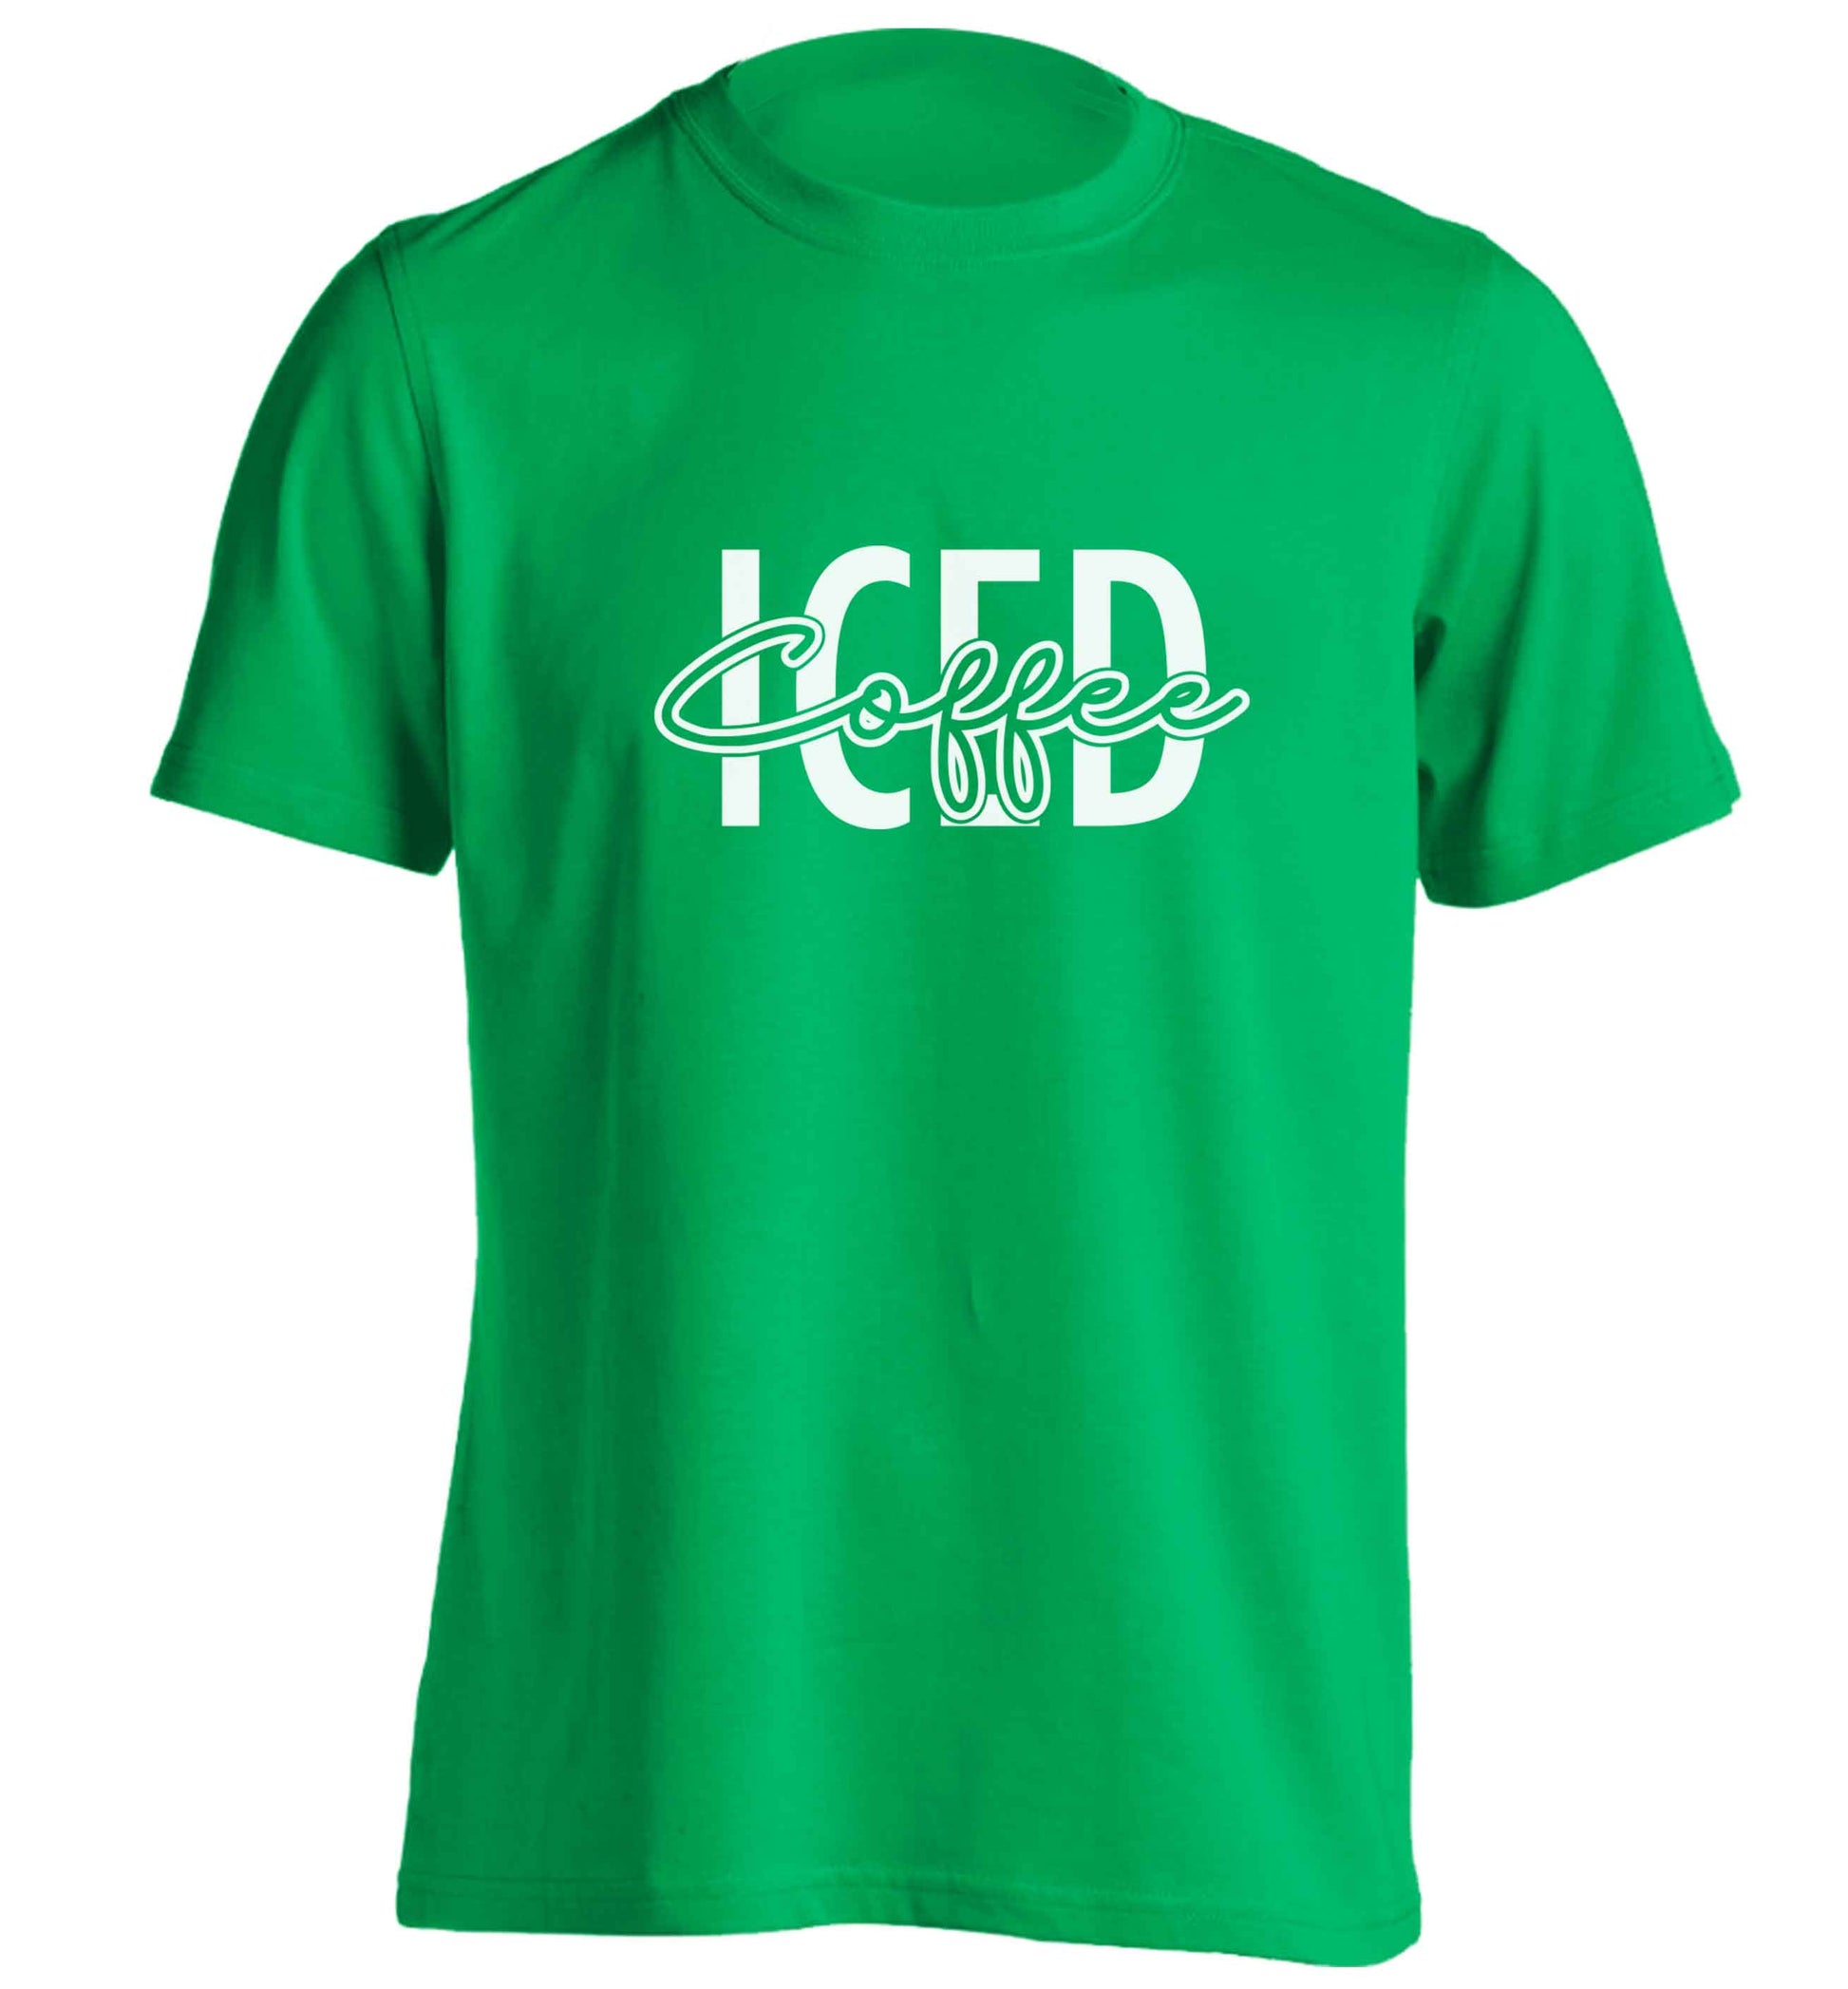 Iced Coffee adults unisex green Tshirt 2XL